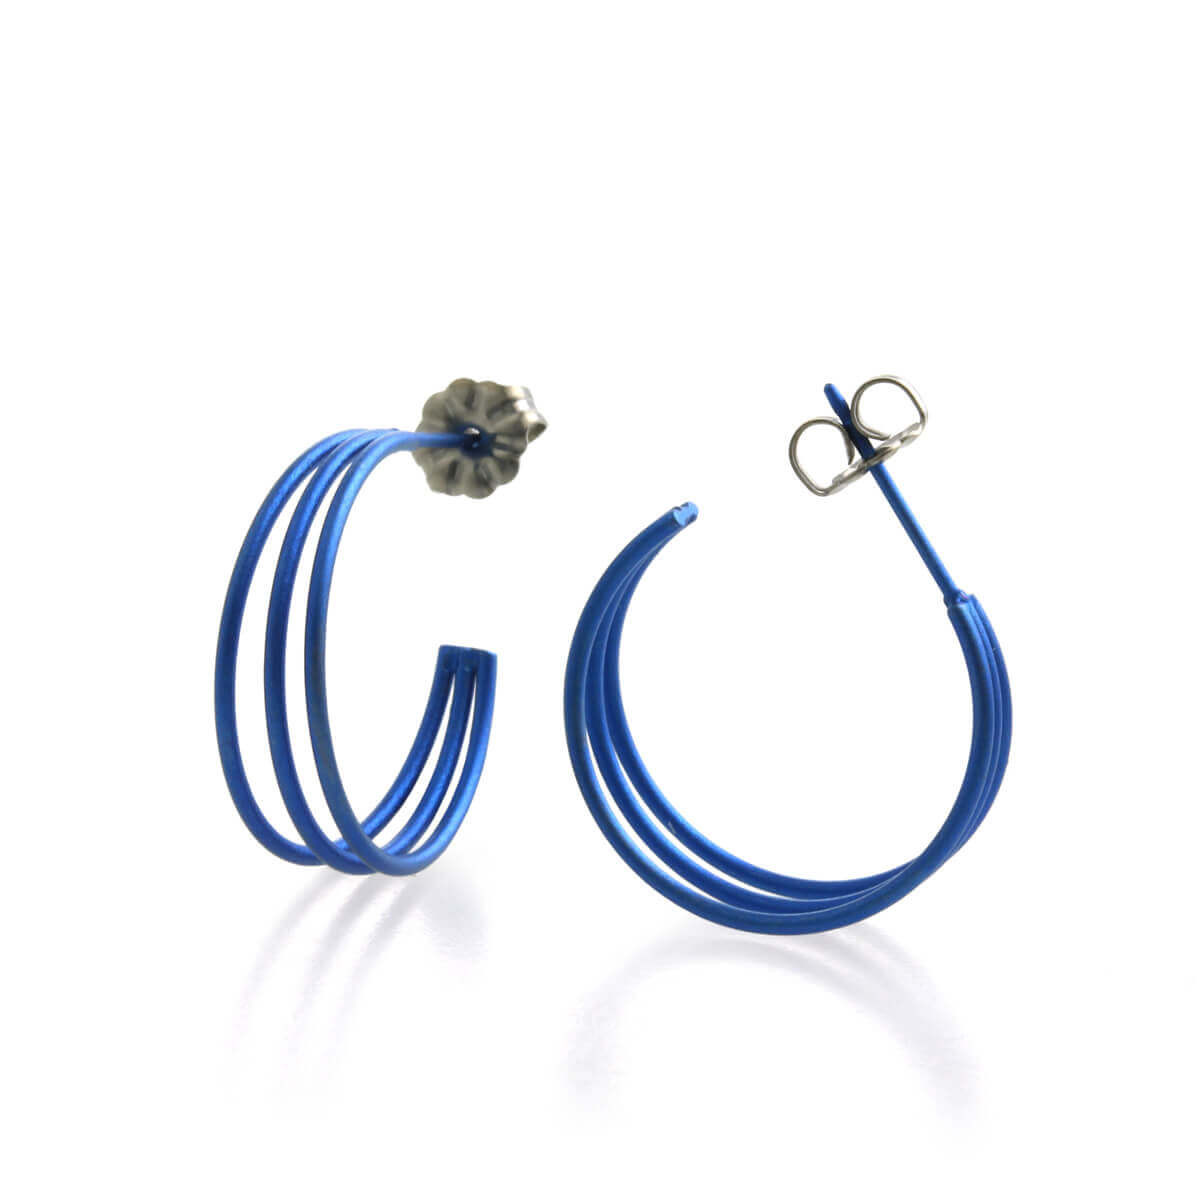 Three strand titanium hoop earrings, 100% hypoallergenic for sensitive ear